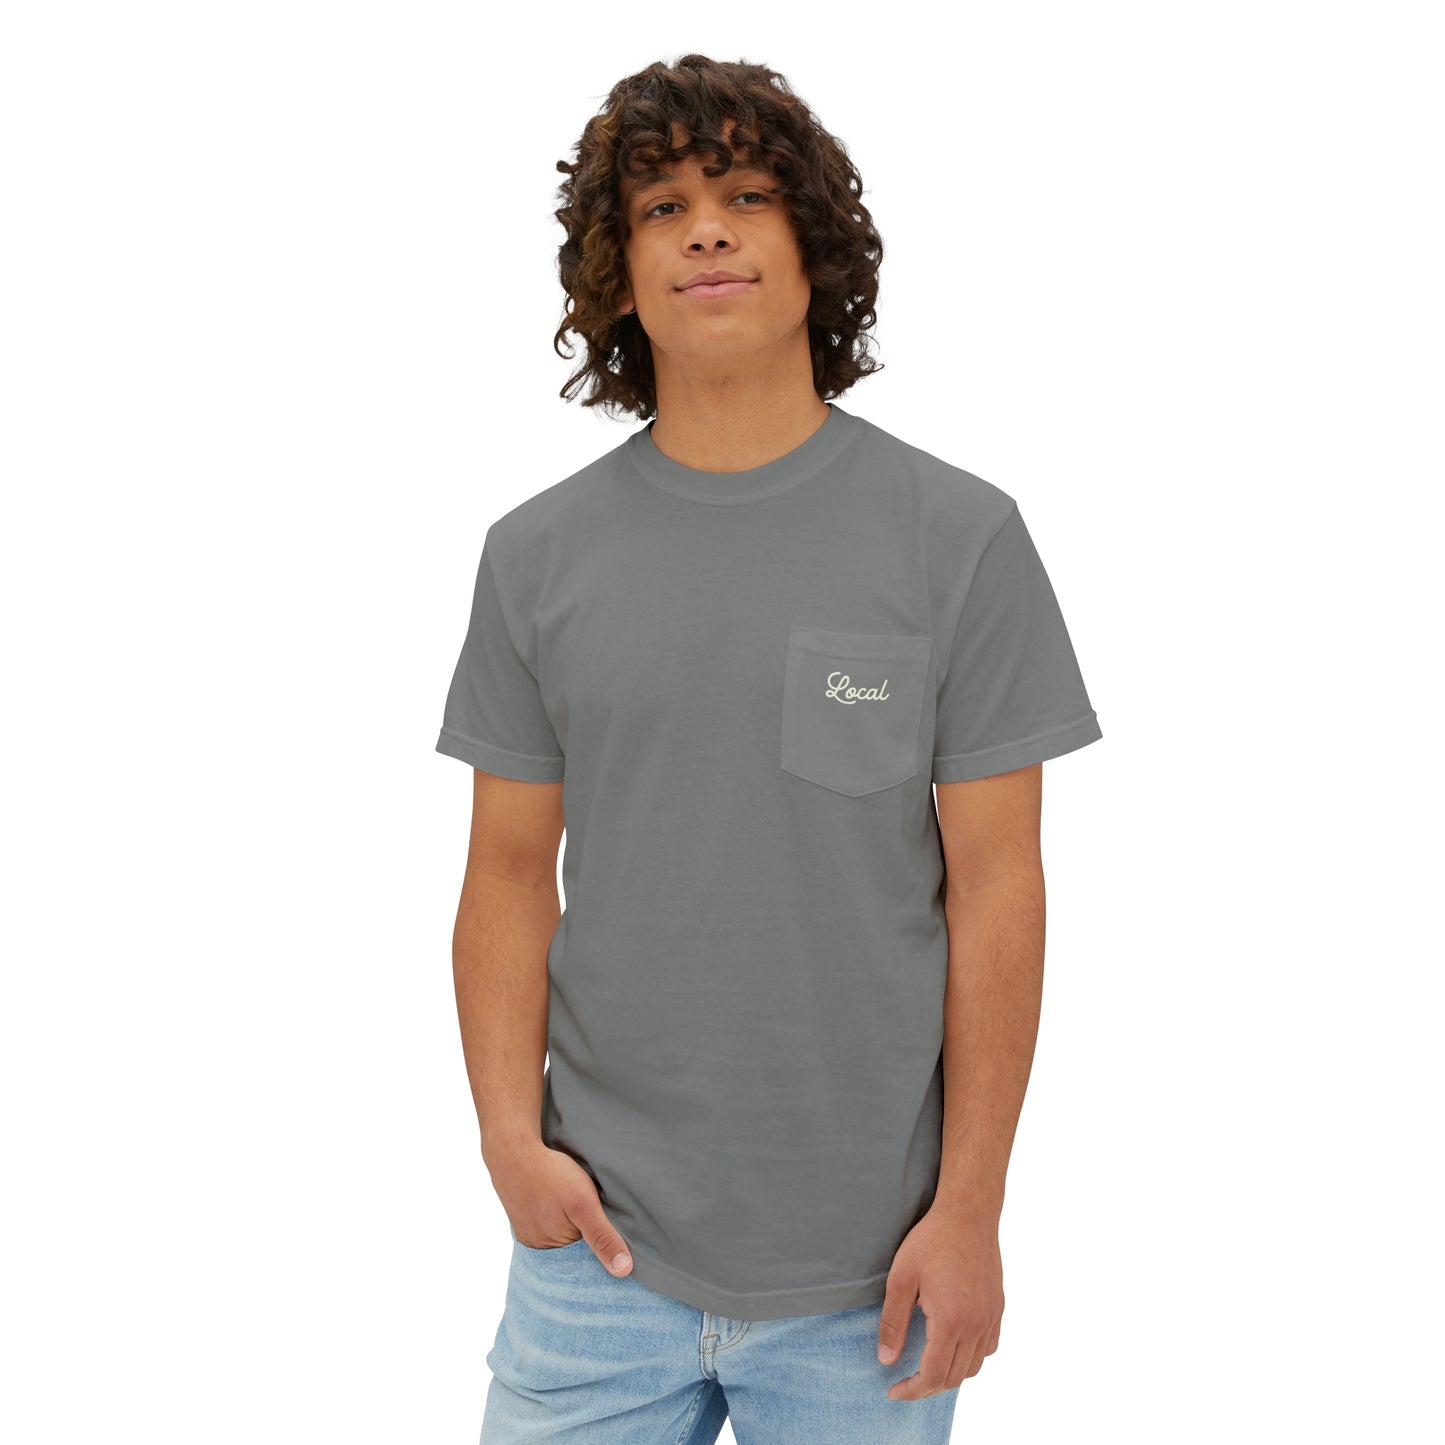 Local Script Unisex Garment-Dyed Pocket T-Shirt